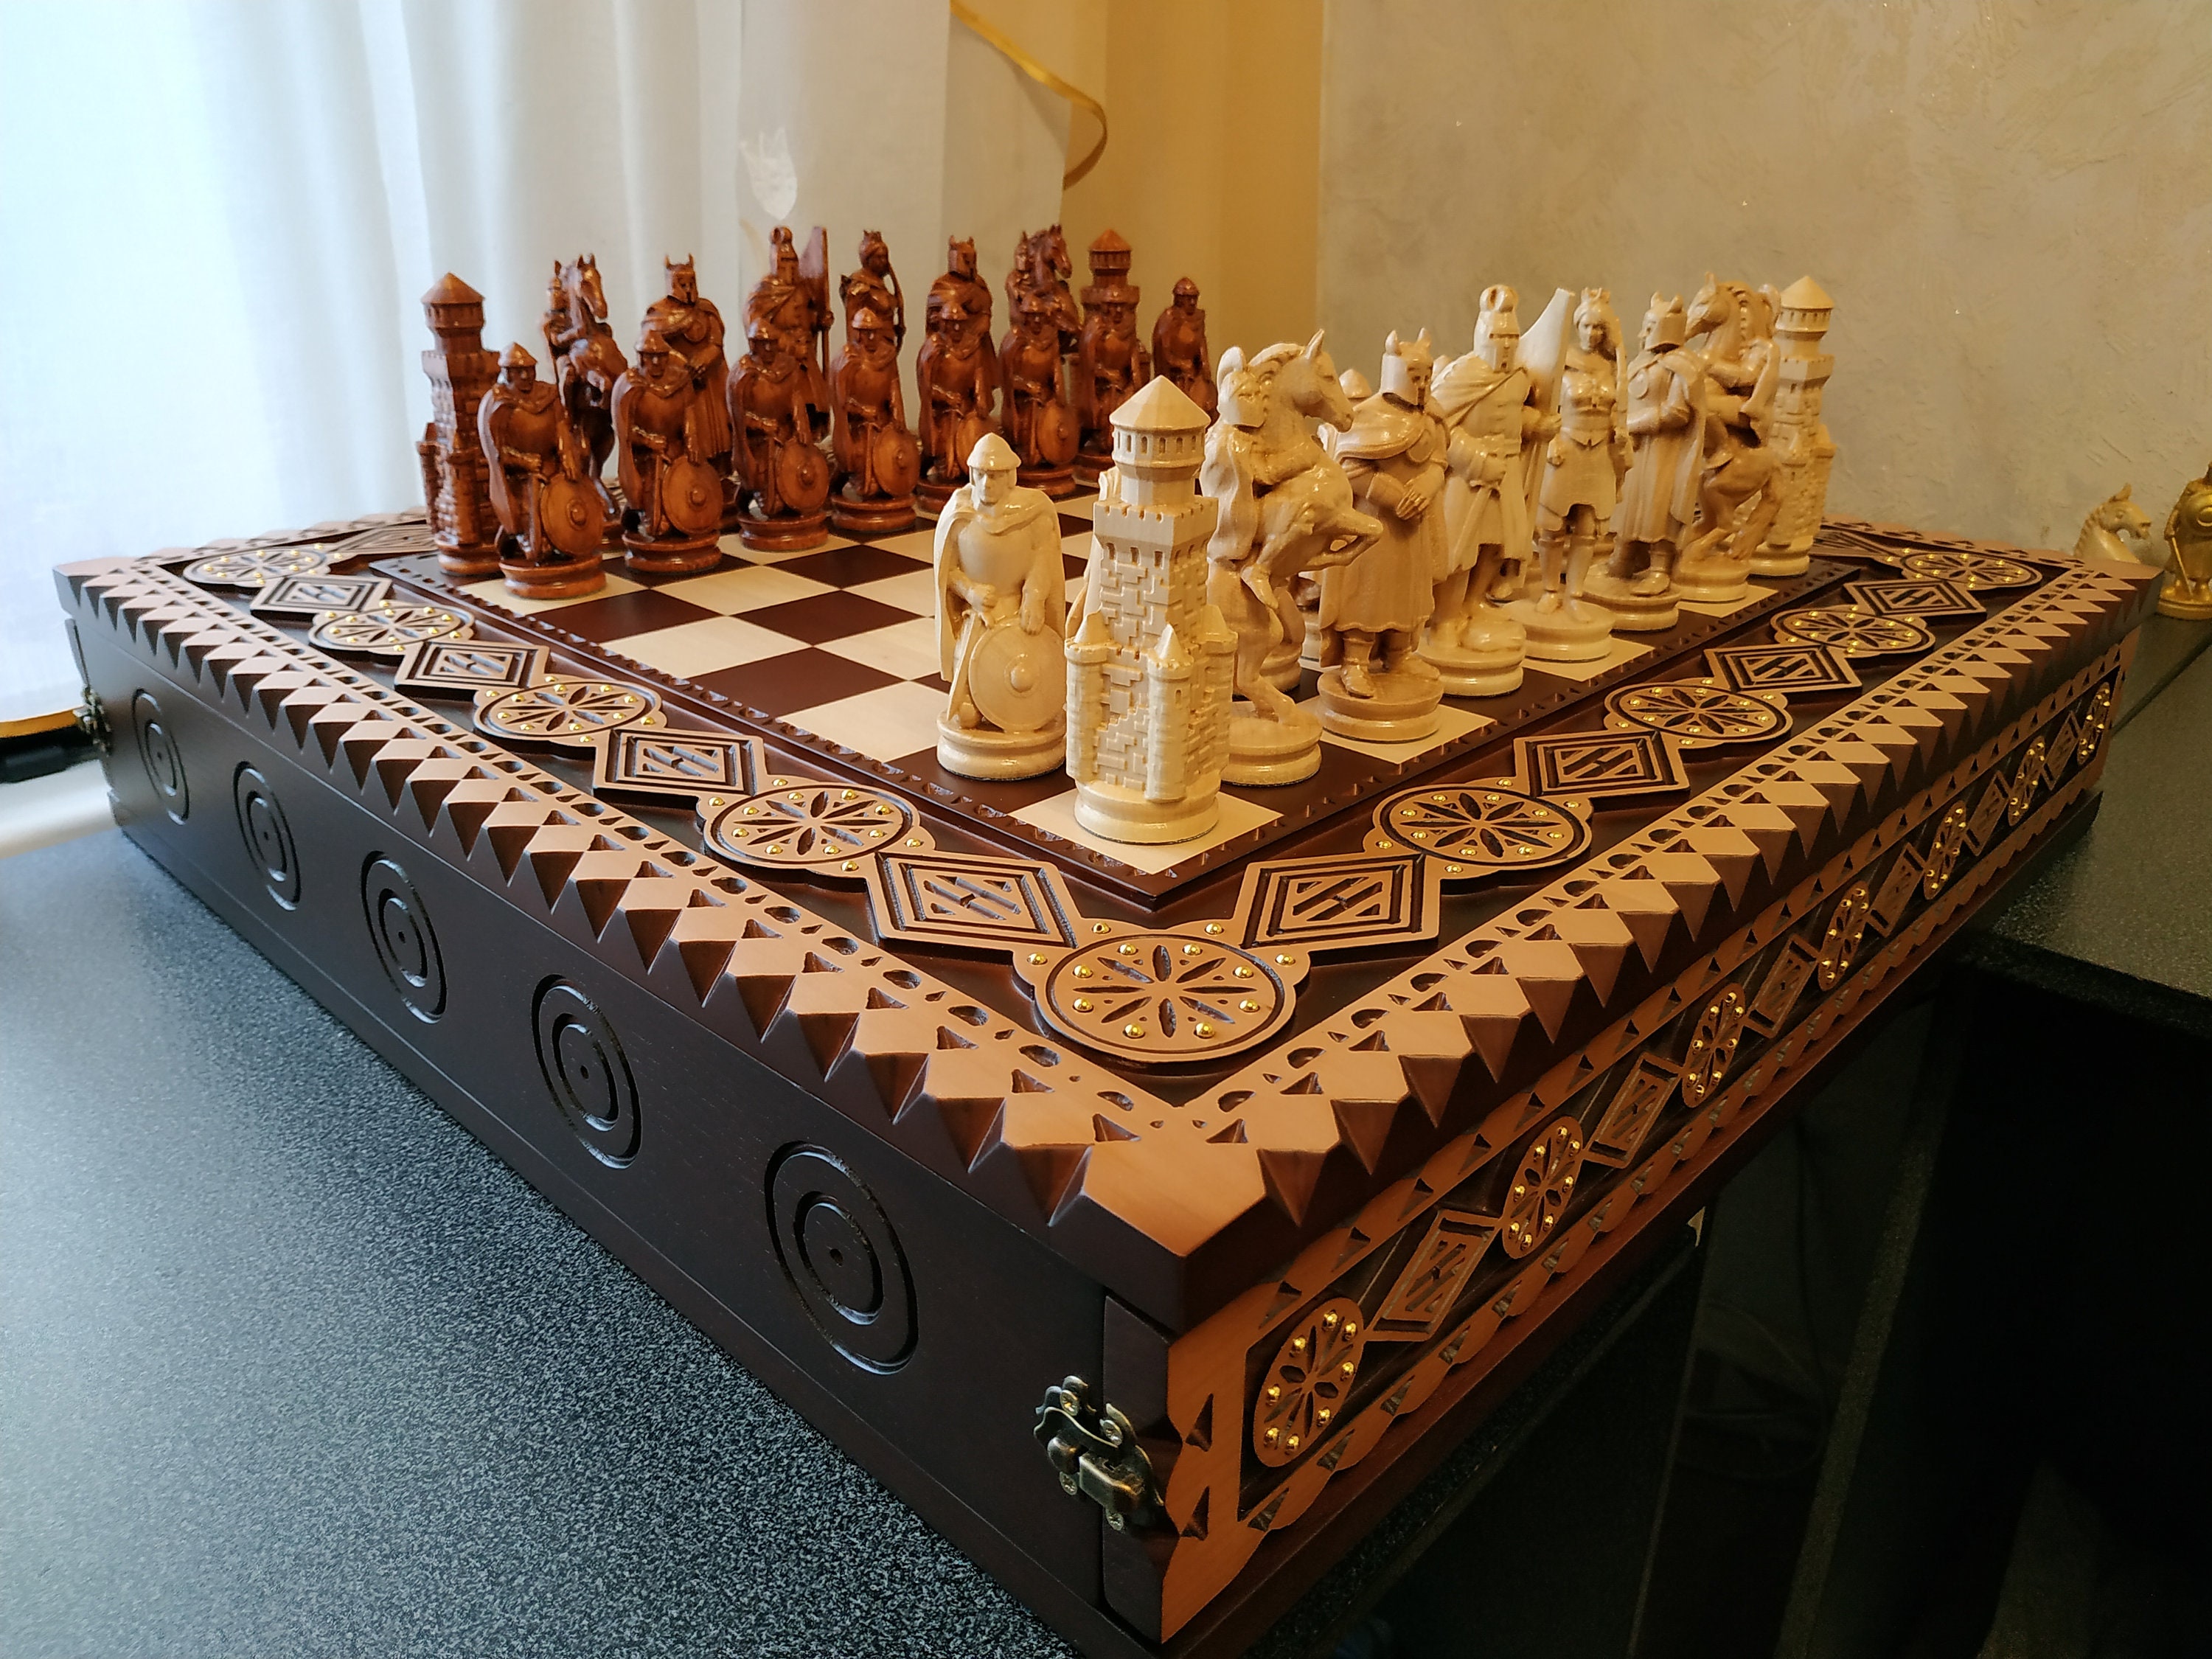 Wooden Chess Set Unique Auto Correcting Design Pieces 10413